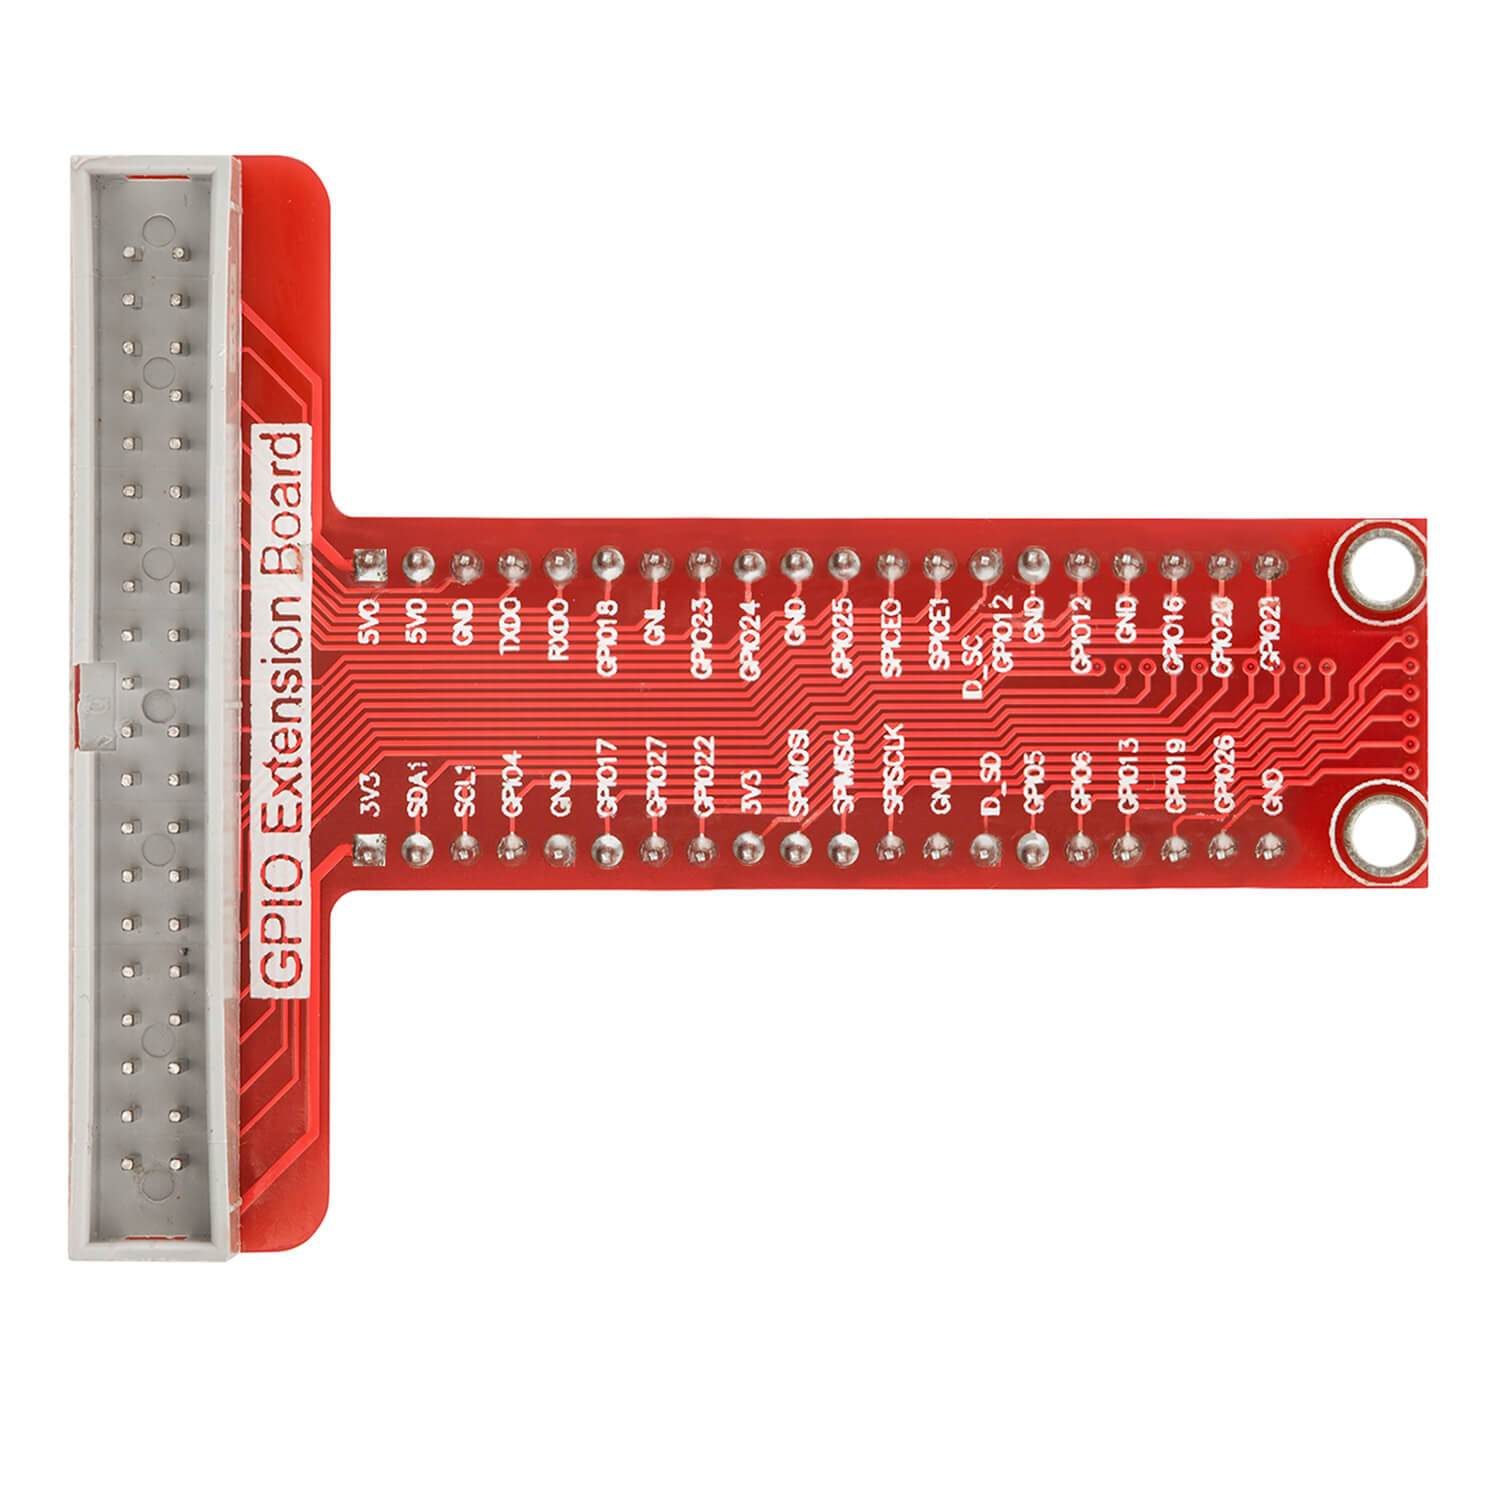 40 Pins GPIO Breakout Board and compatible flat ribbon ribbon cable